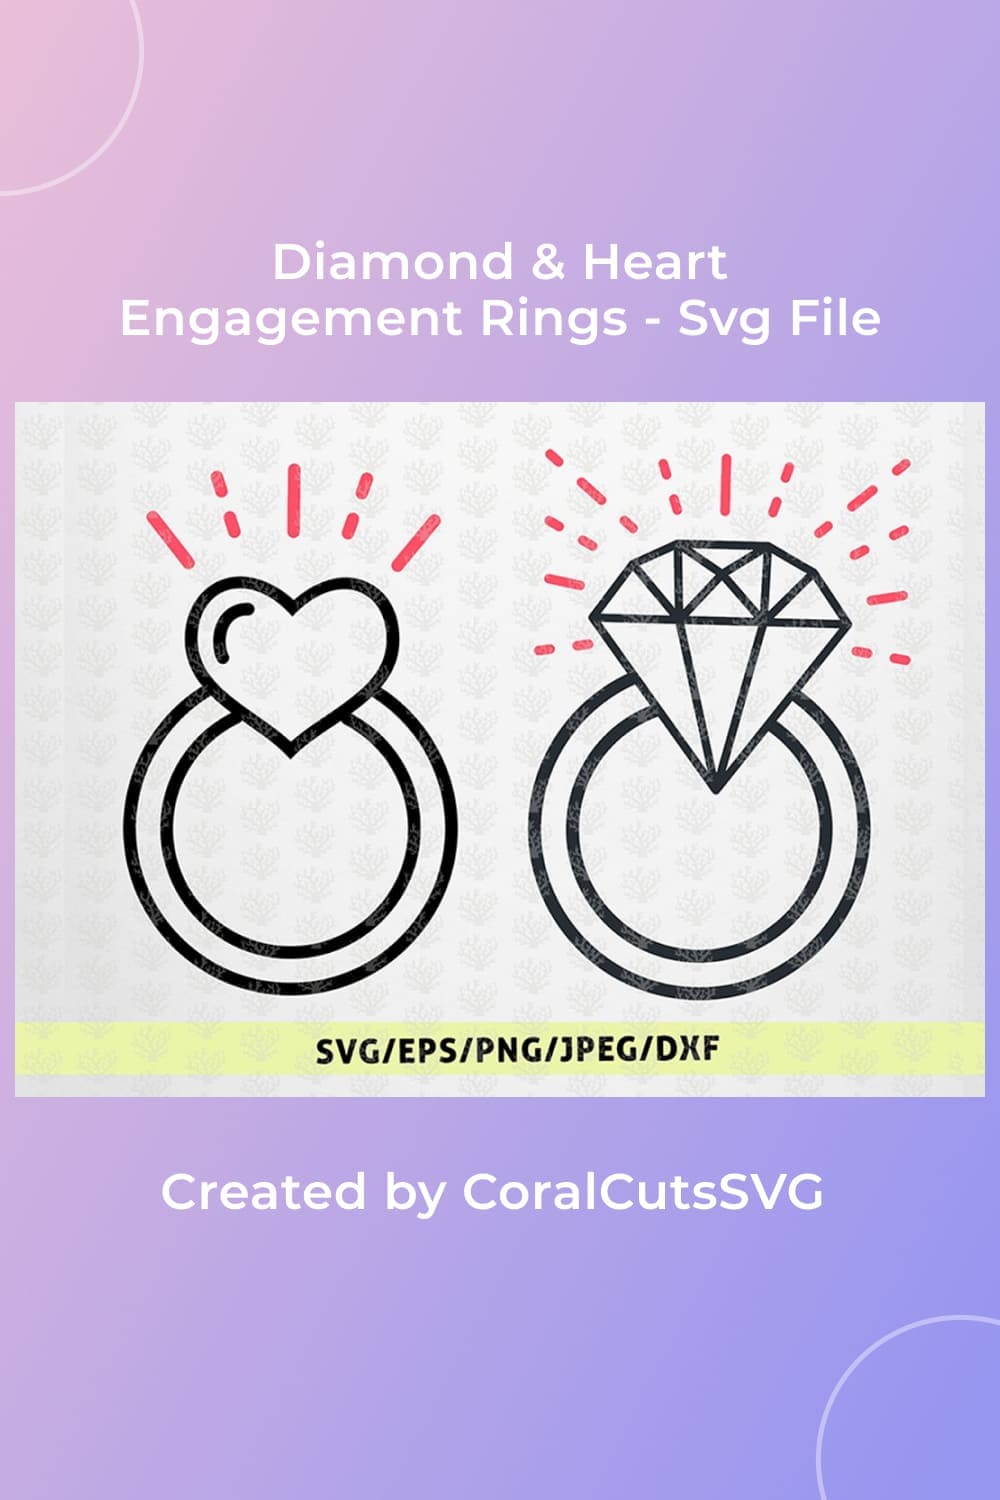 Diamond & Heart Engagement Rings - Svg File.